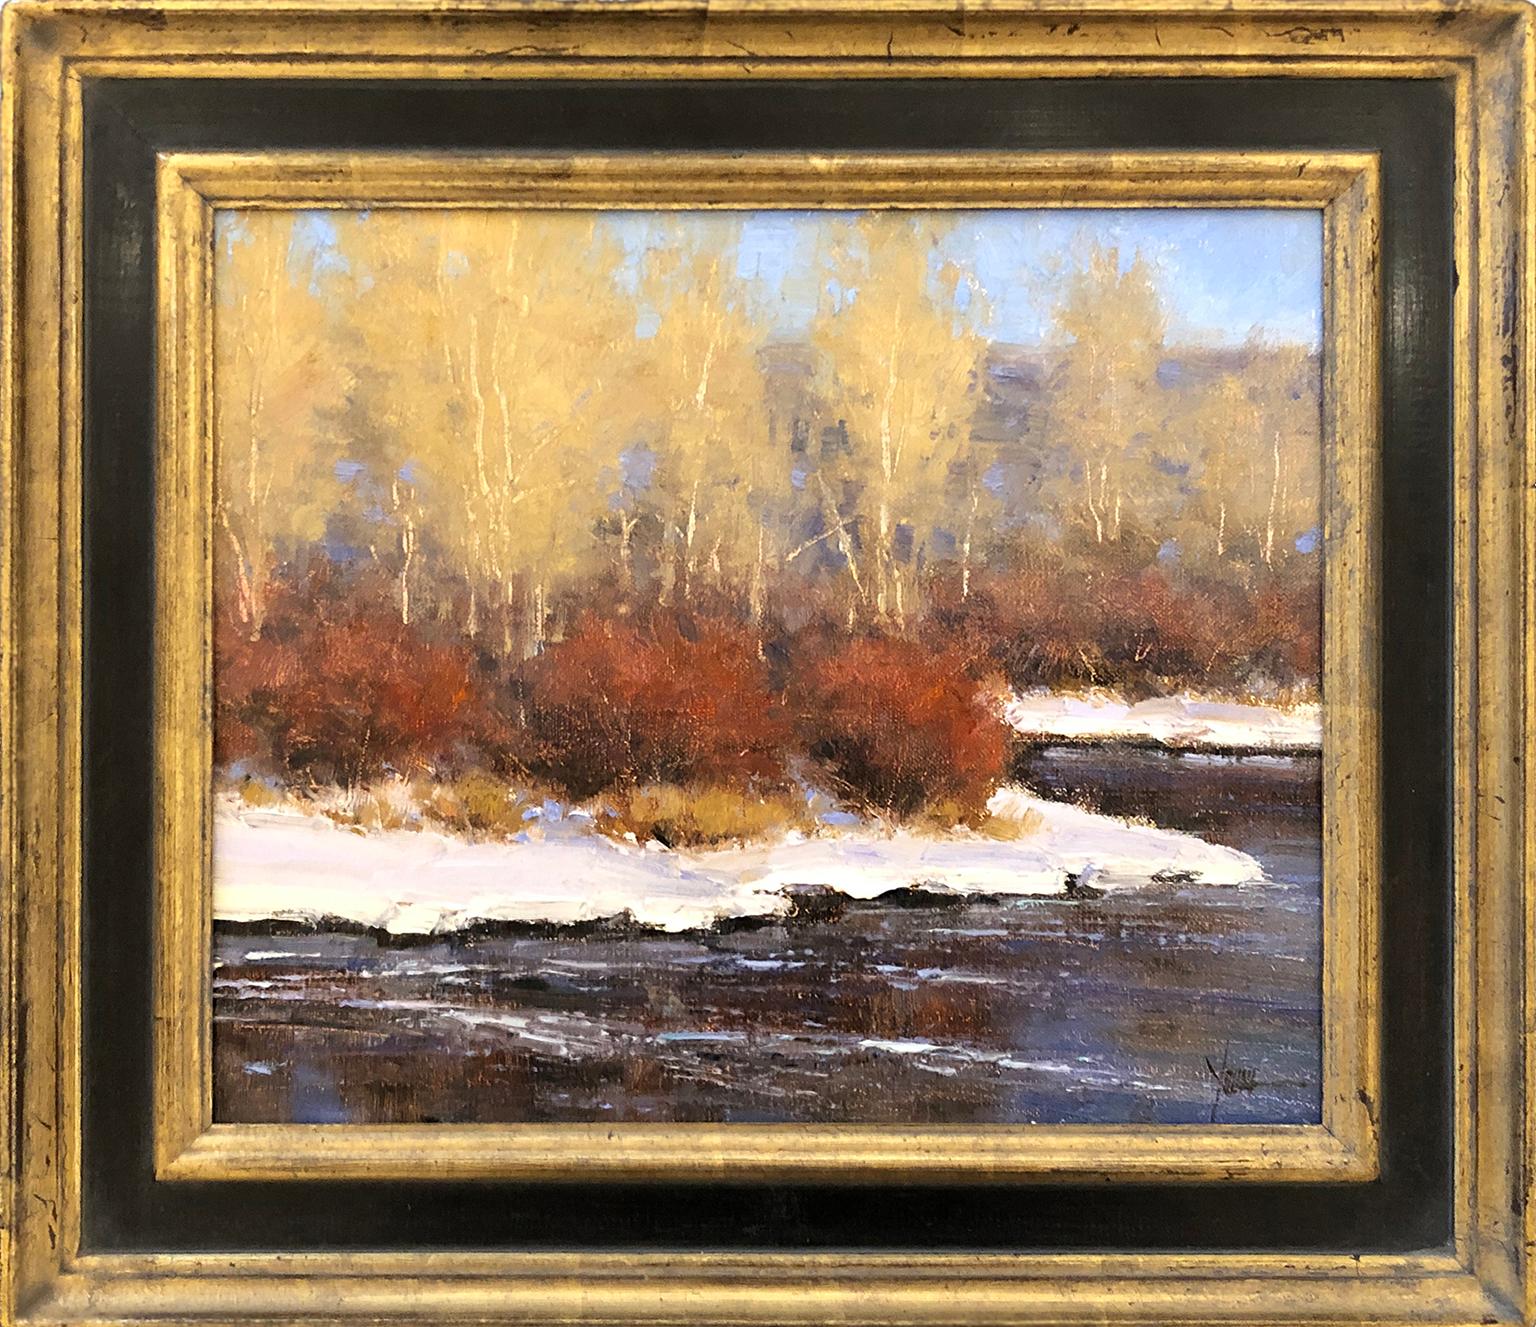 Dan Young Landscape Painting - December Color (golden Aspen's, winding river, snow)